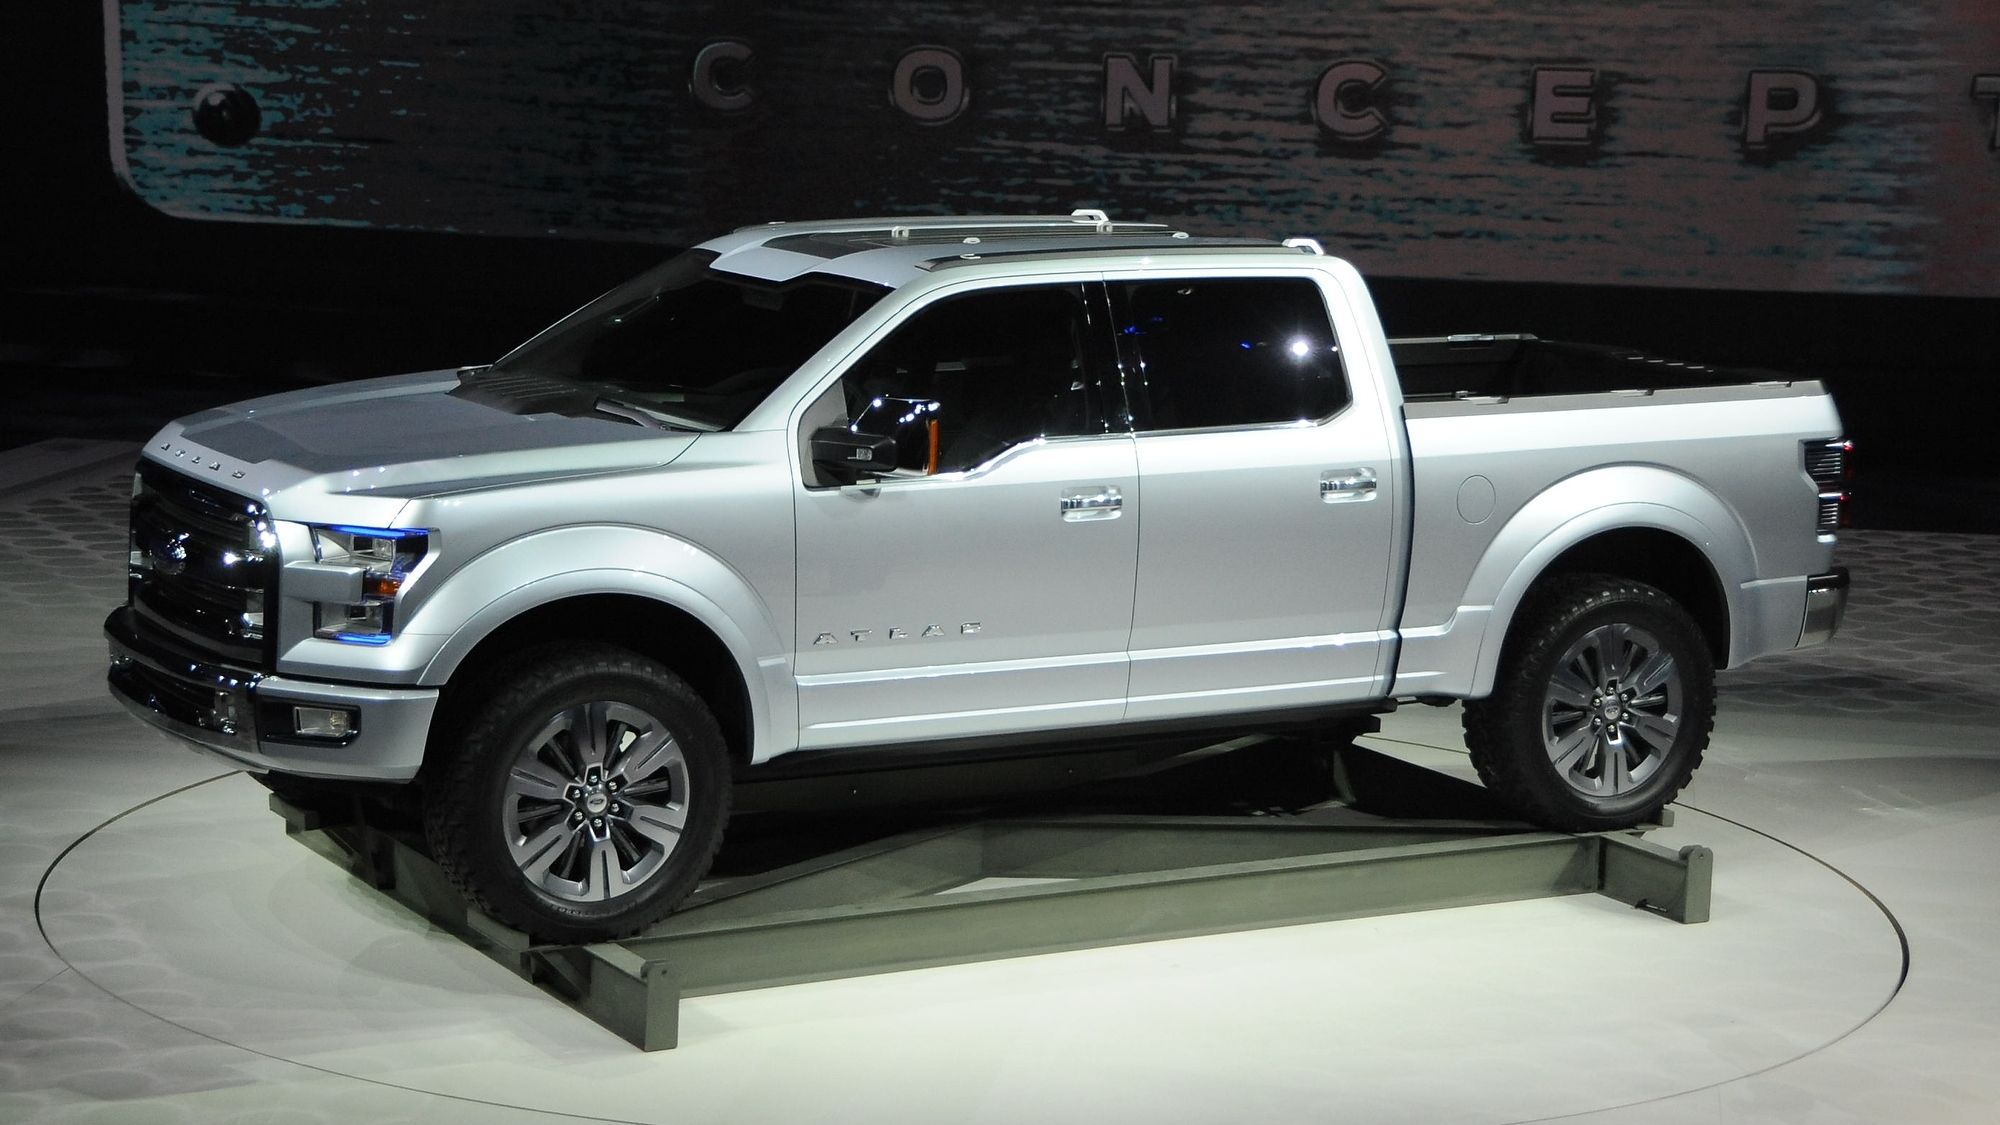 Ford Atlas Concept revealed at 2013 Detroit Auto Show